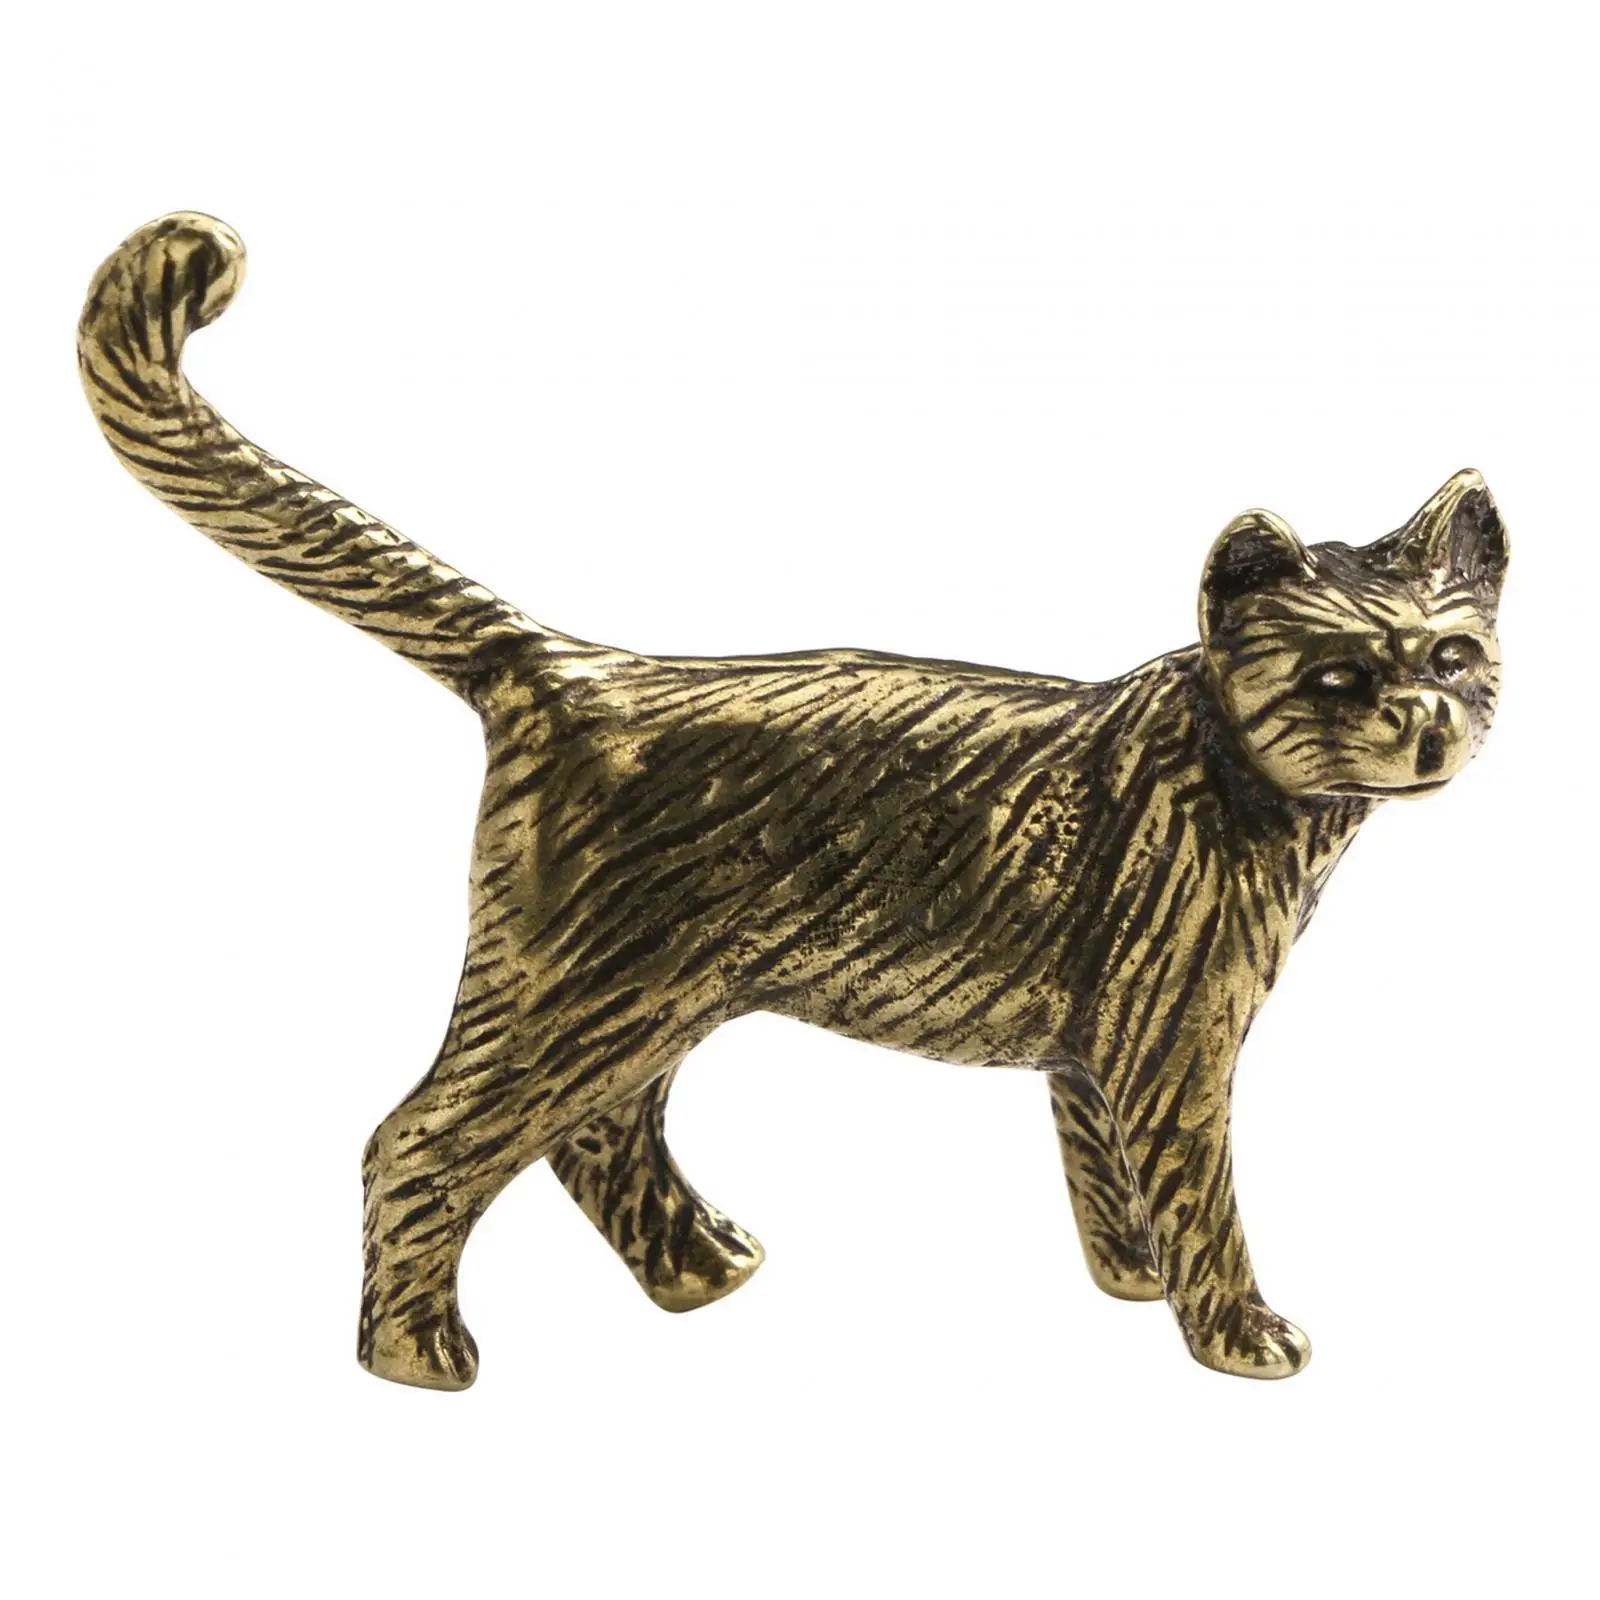 Cat Copper Sculpture Excellent Craftsmanship Crafts Collectible Animal Figurine